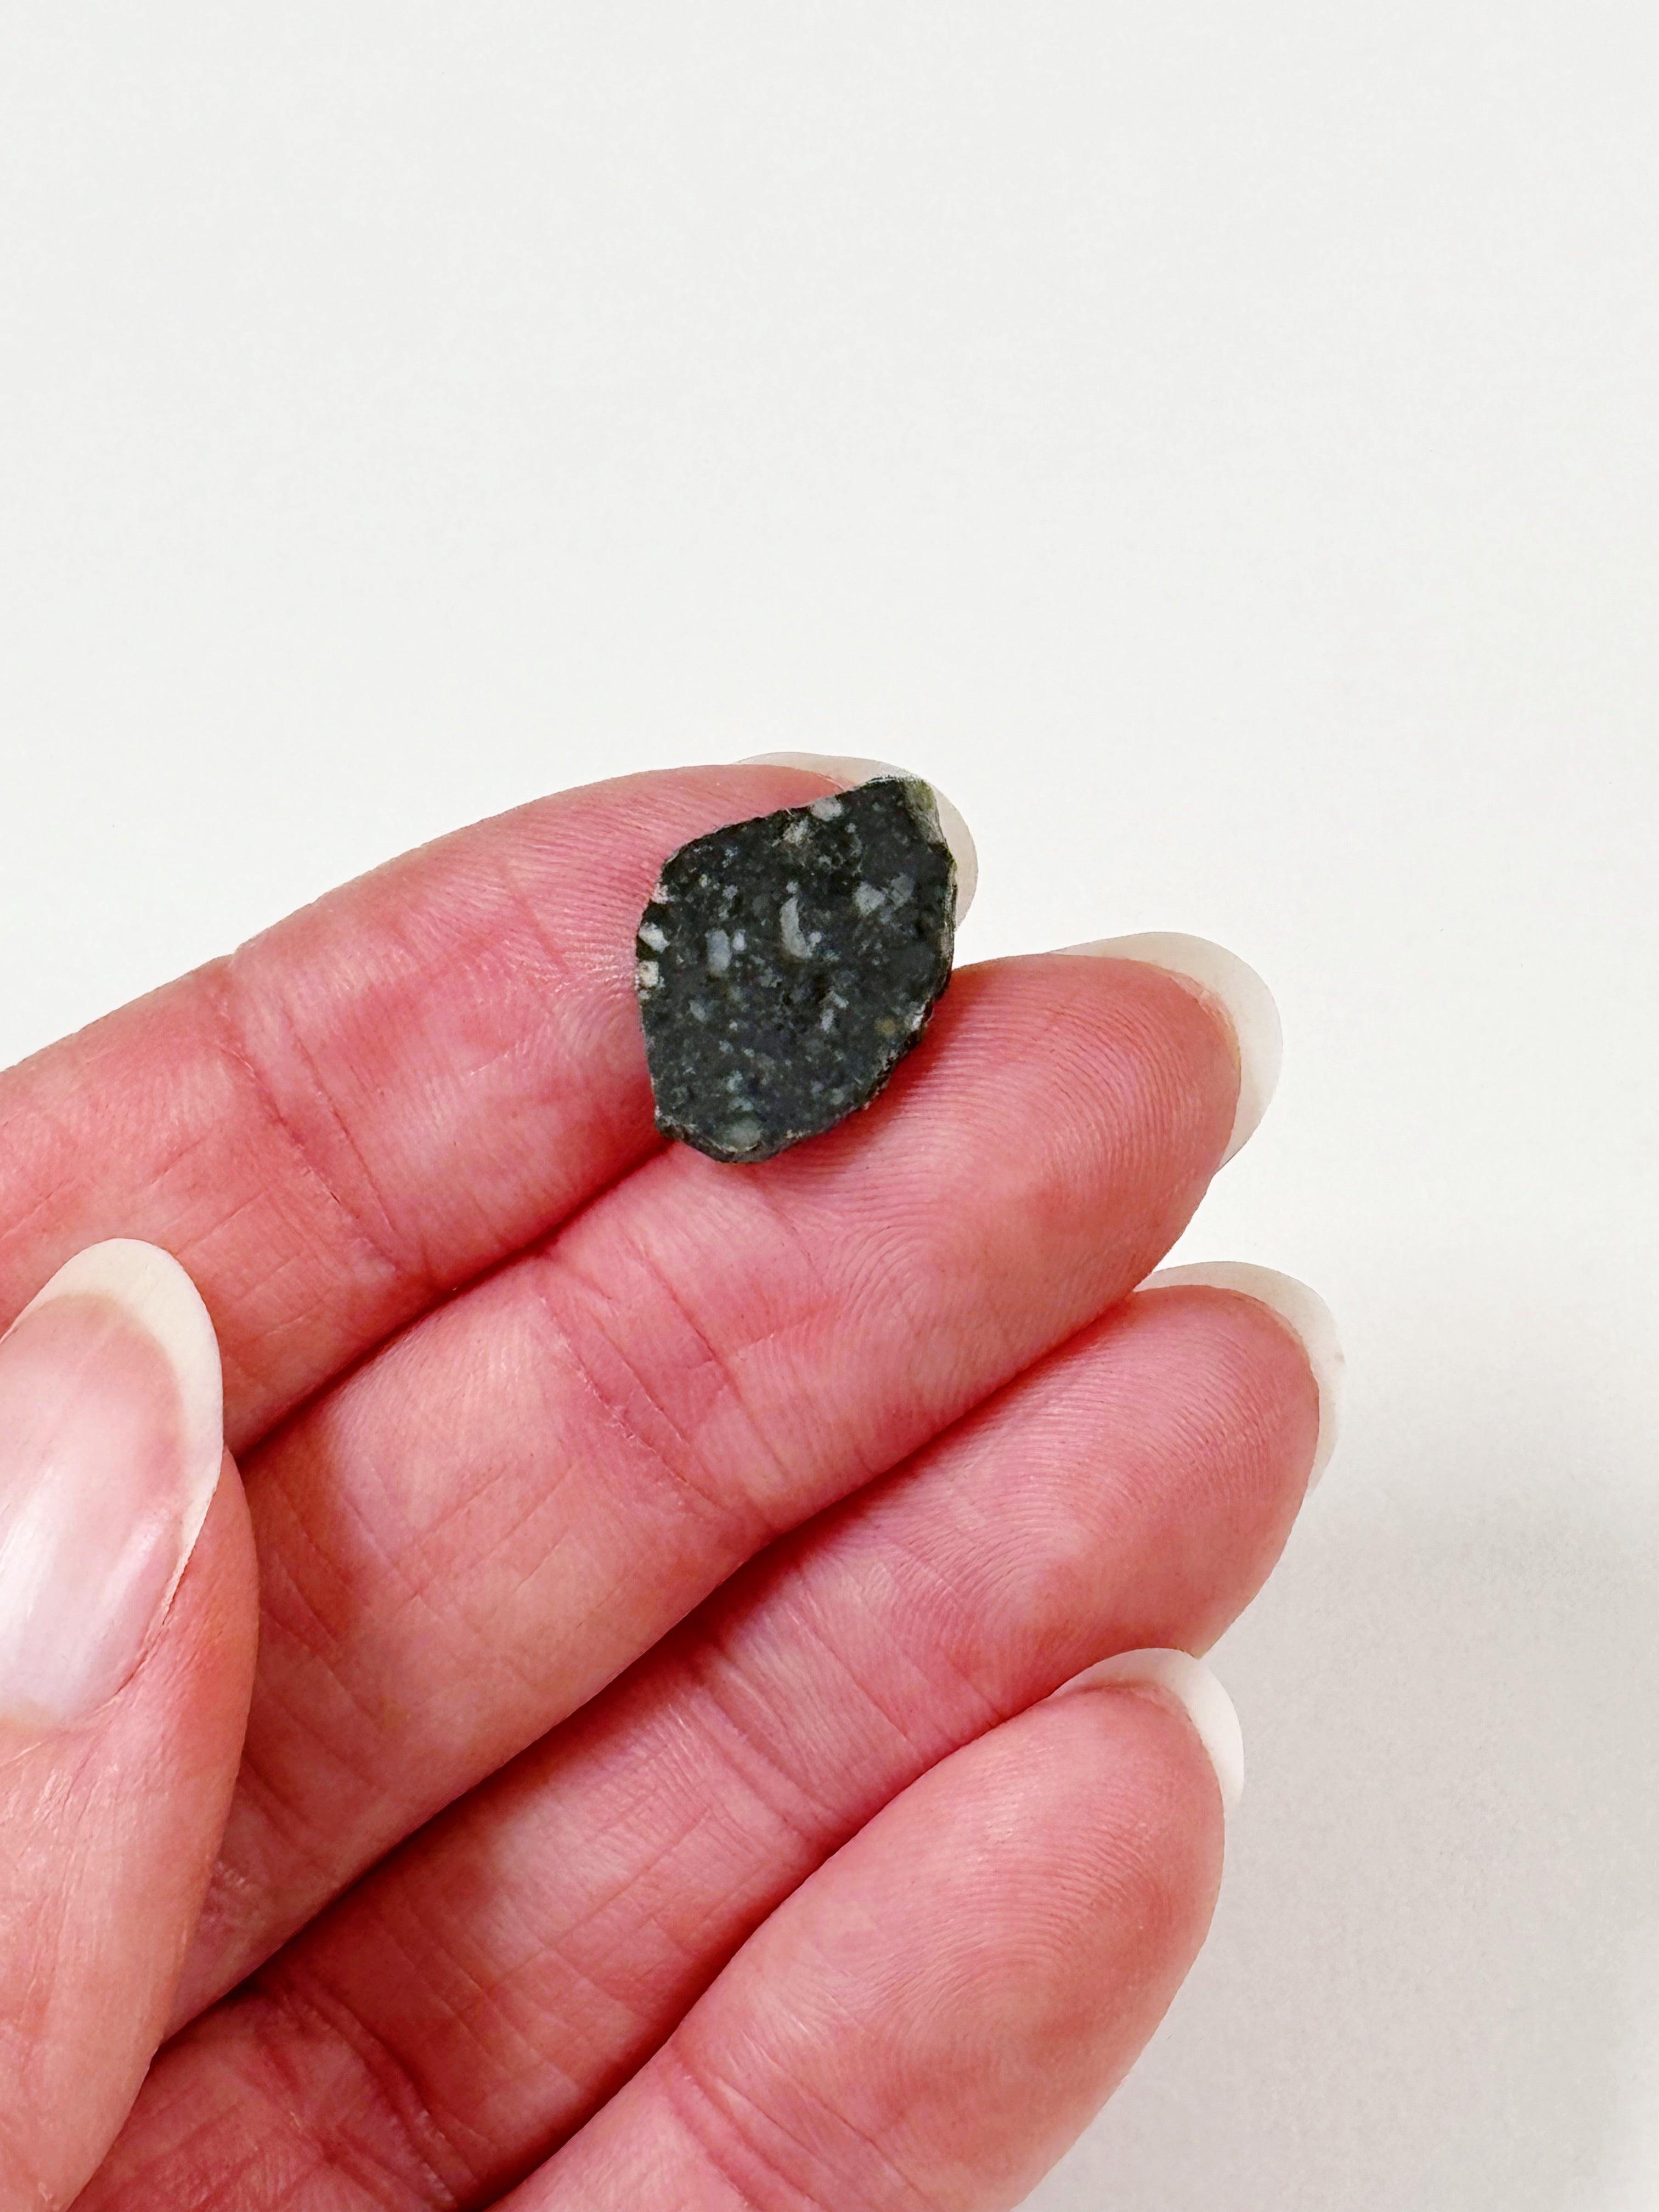 LUNAR METEORITE 3 - feldspathic breccia, lunar meteorite, meteorite, moon, moon meteorite, recently added - The Mineral Maven